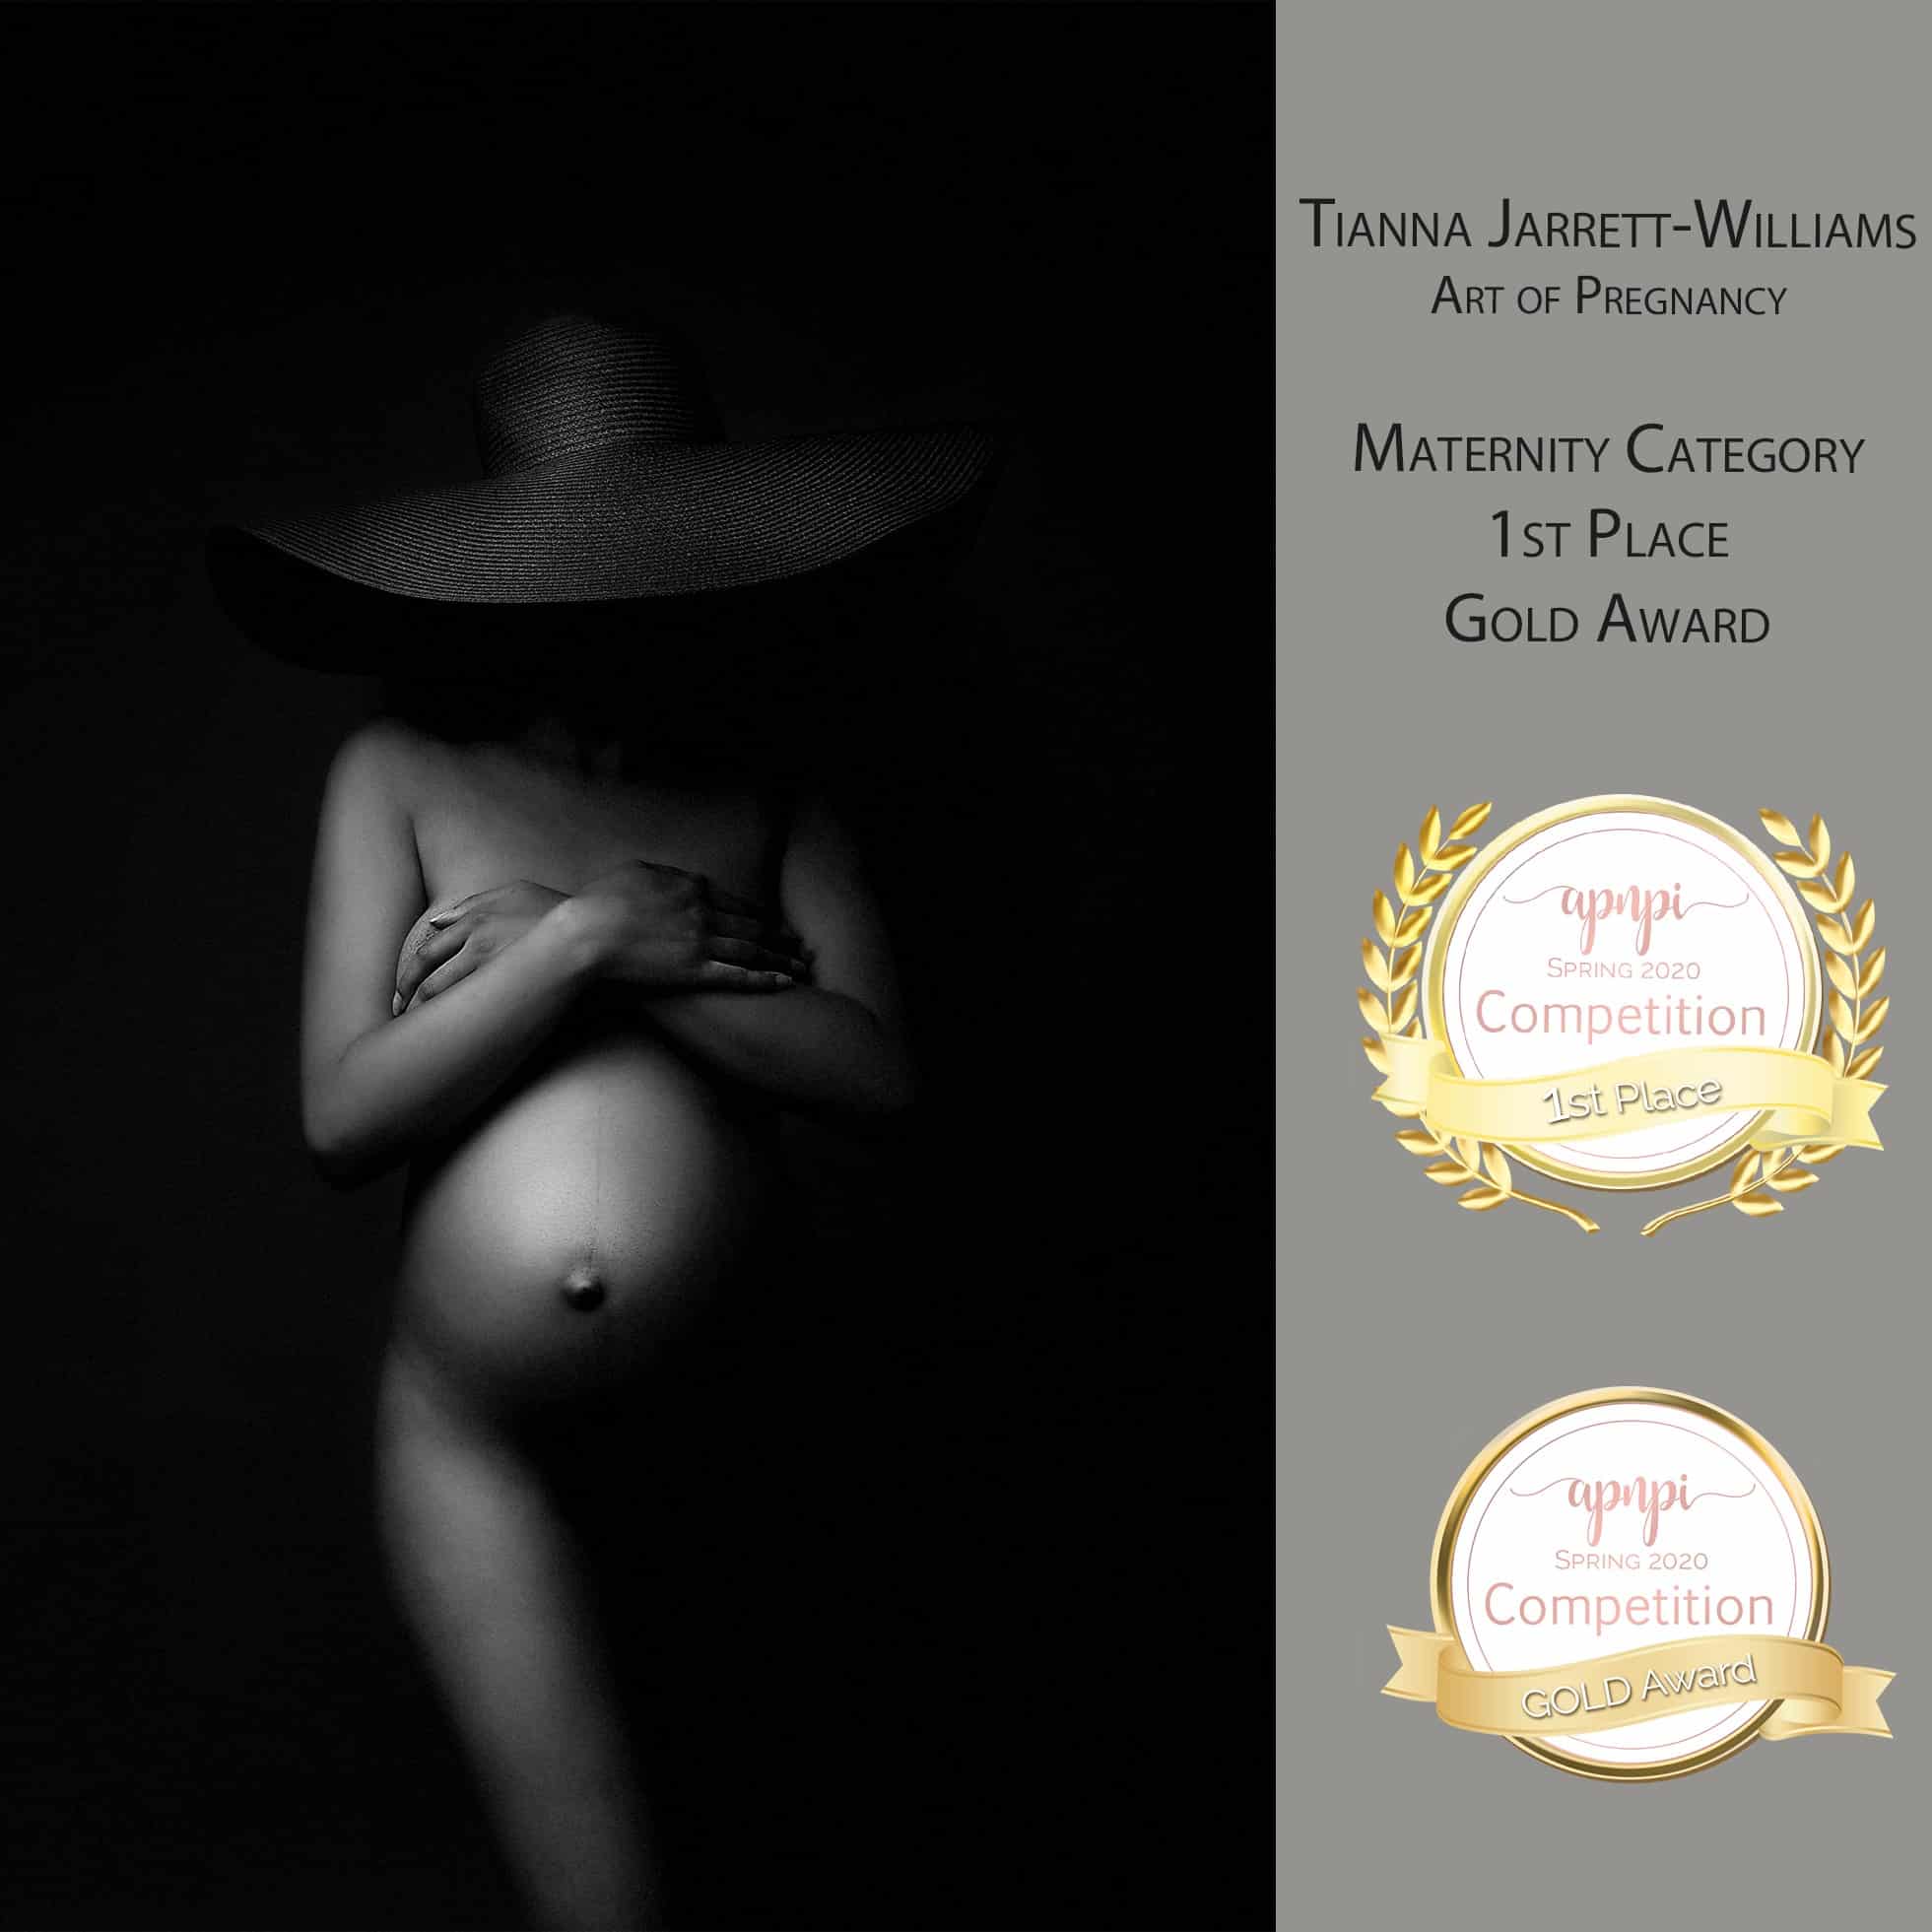 APNPI Competition 1st Place Winner – Maternity. “Art of Pregnancy” by Tianna Jarrett-Williams